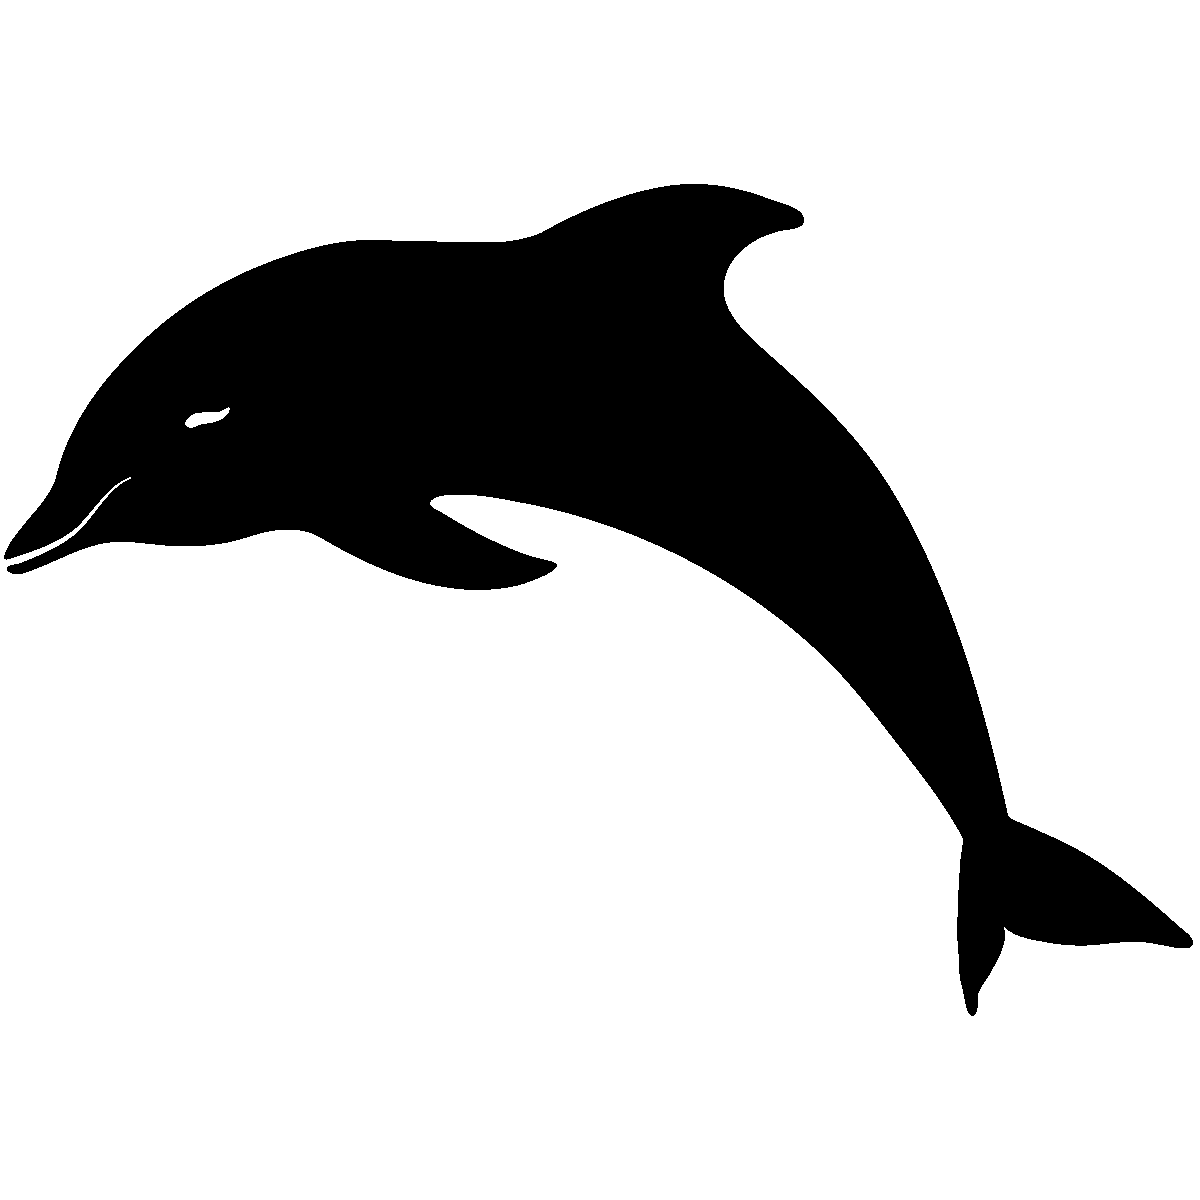 zweep Riskant Sluier Muursticker badkamer - Muursticker dolfijn | Ambiance-sticker.com